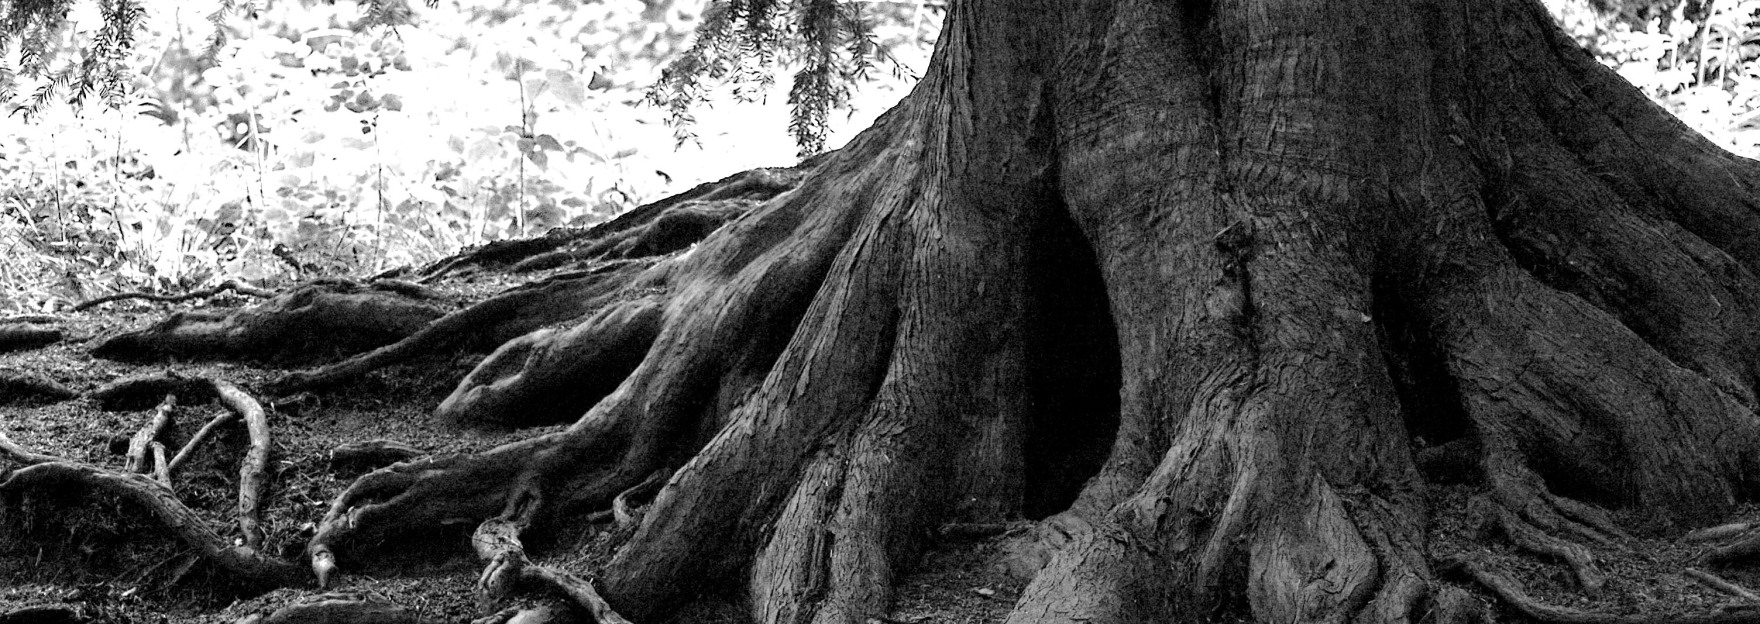 Корни большого дуба. Японский дуб мидзунара. Деревья. Ствол дерева. Корни дерева.